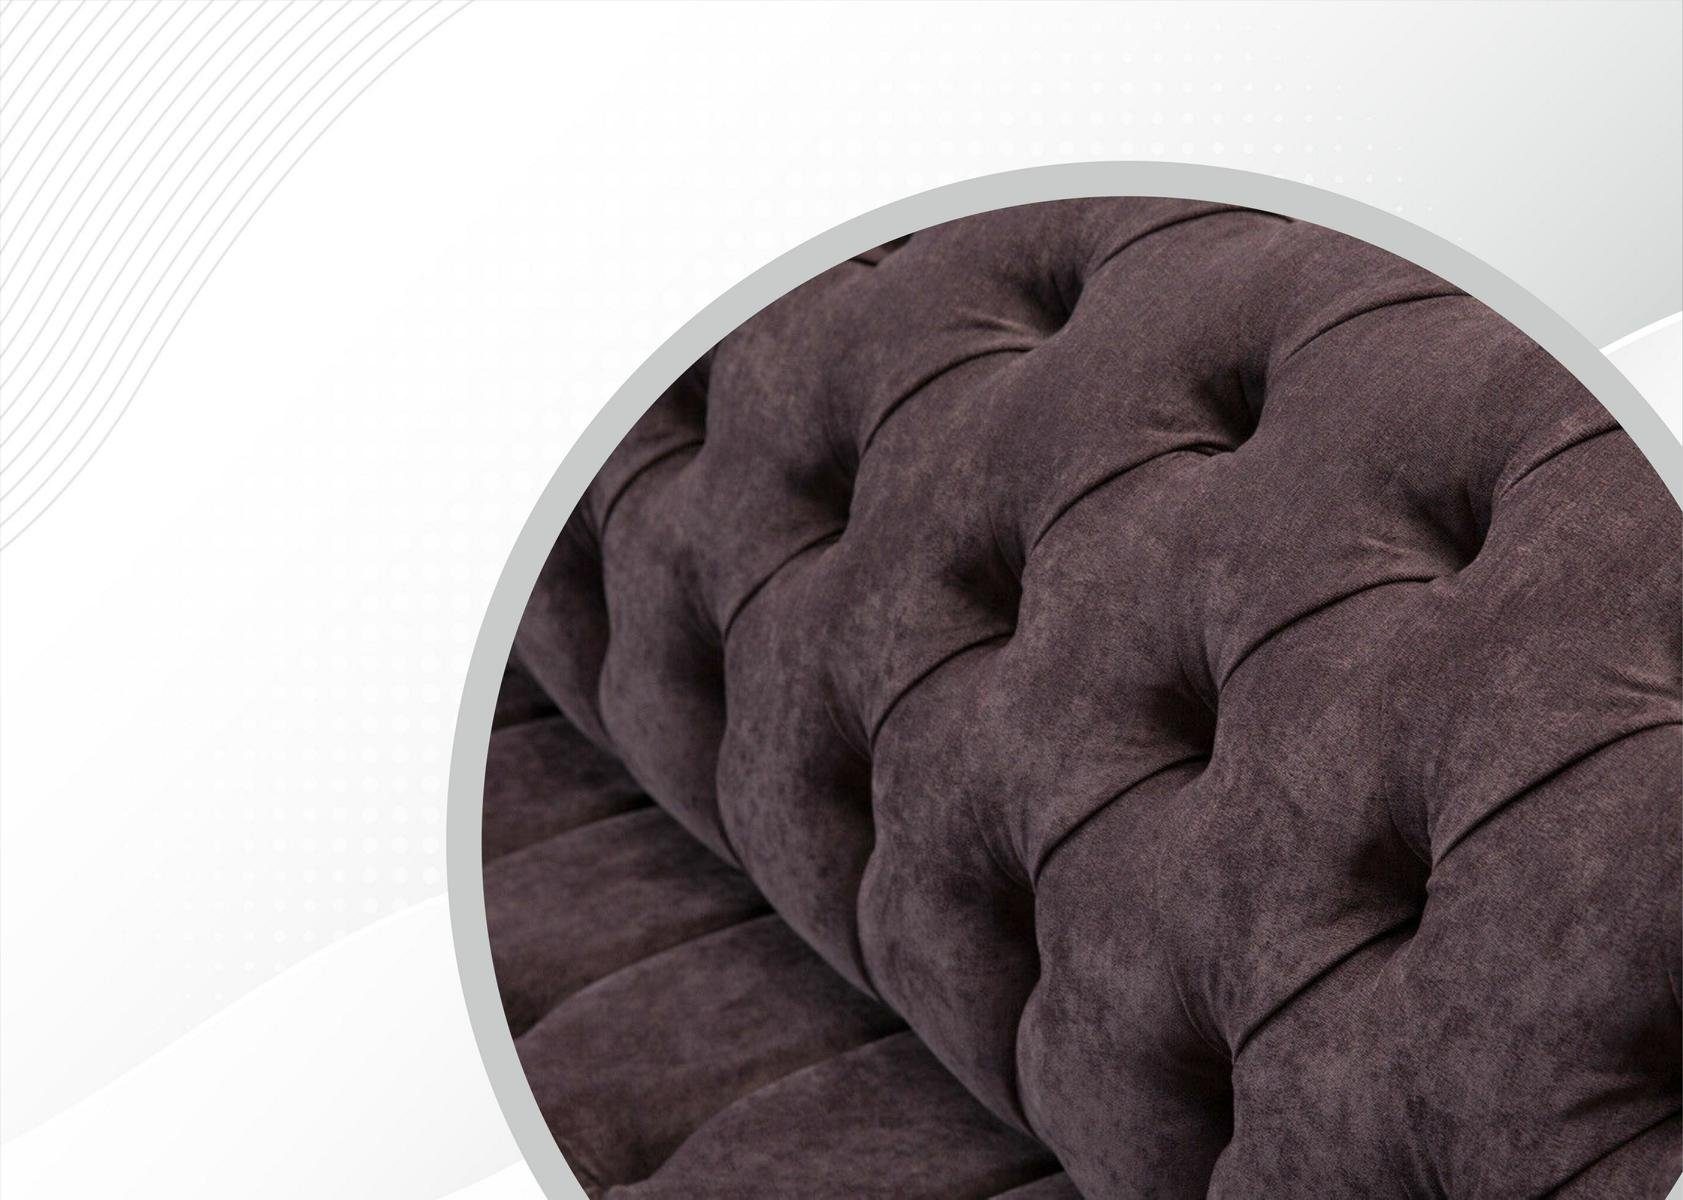 Sofa Chesterfield Chesterfield-Sofa, Design 4 cm Sofa JVmoebel Couch 265 Sitzer